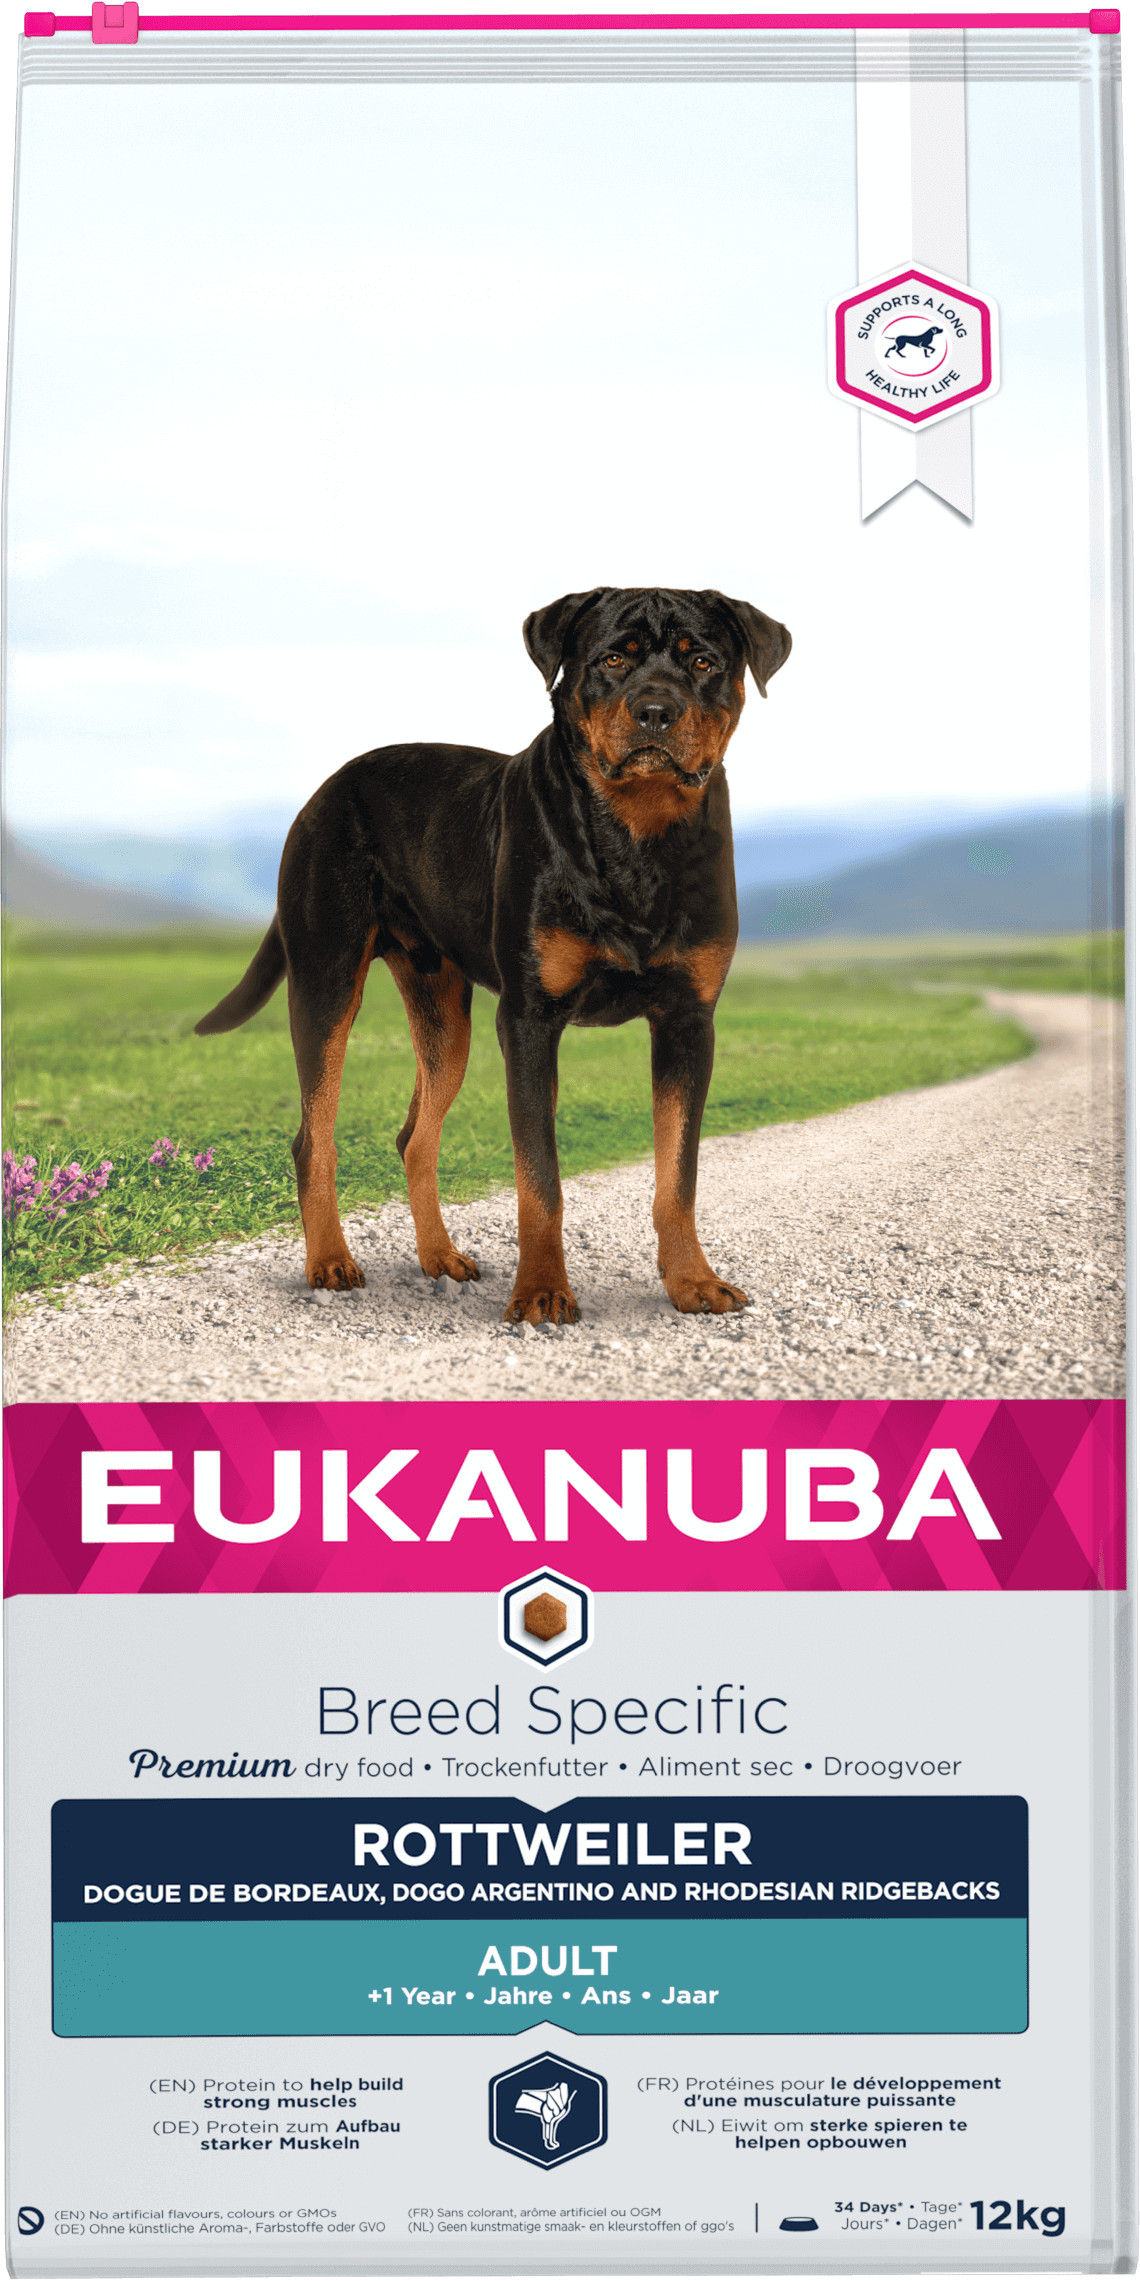 Eukanuba Rottweiler hondenvoer